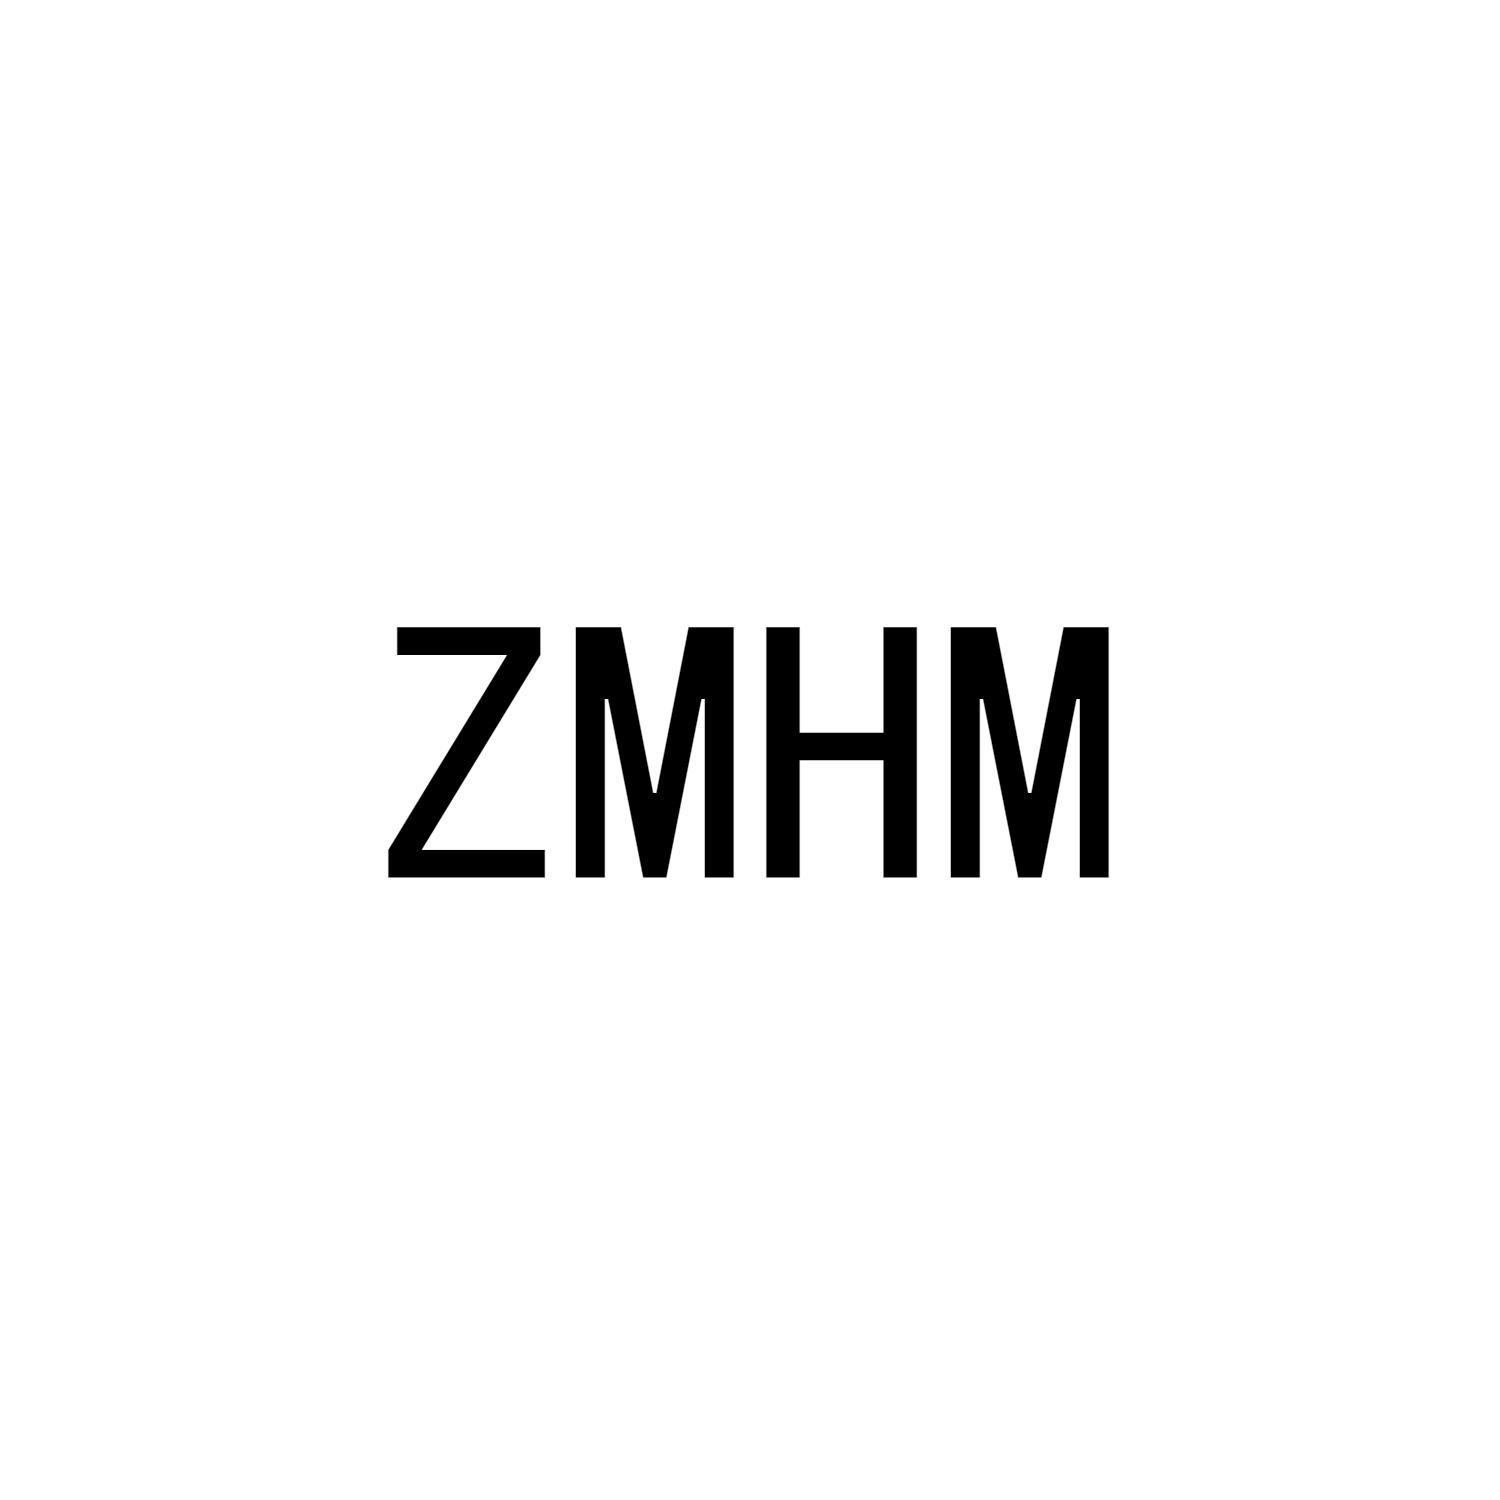 ZMHM